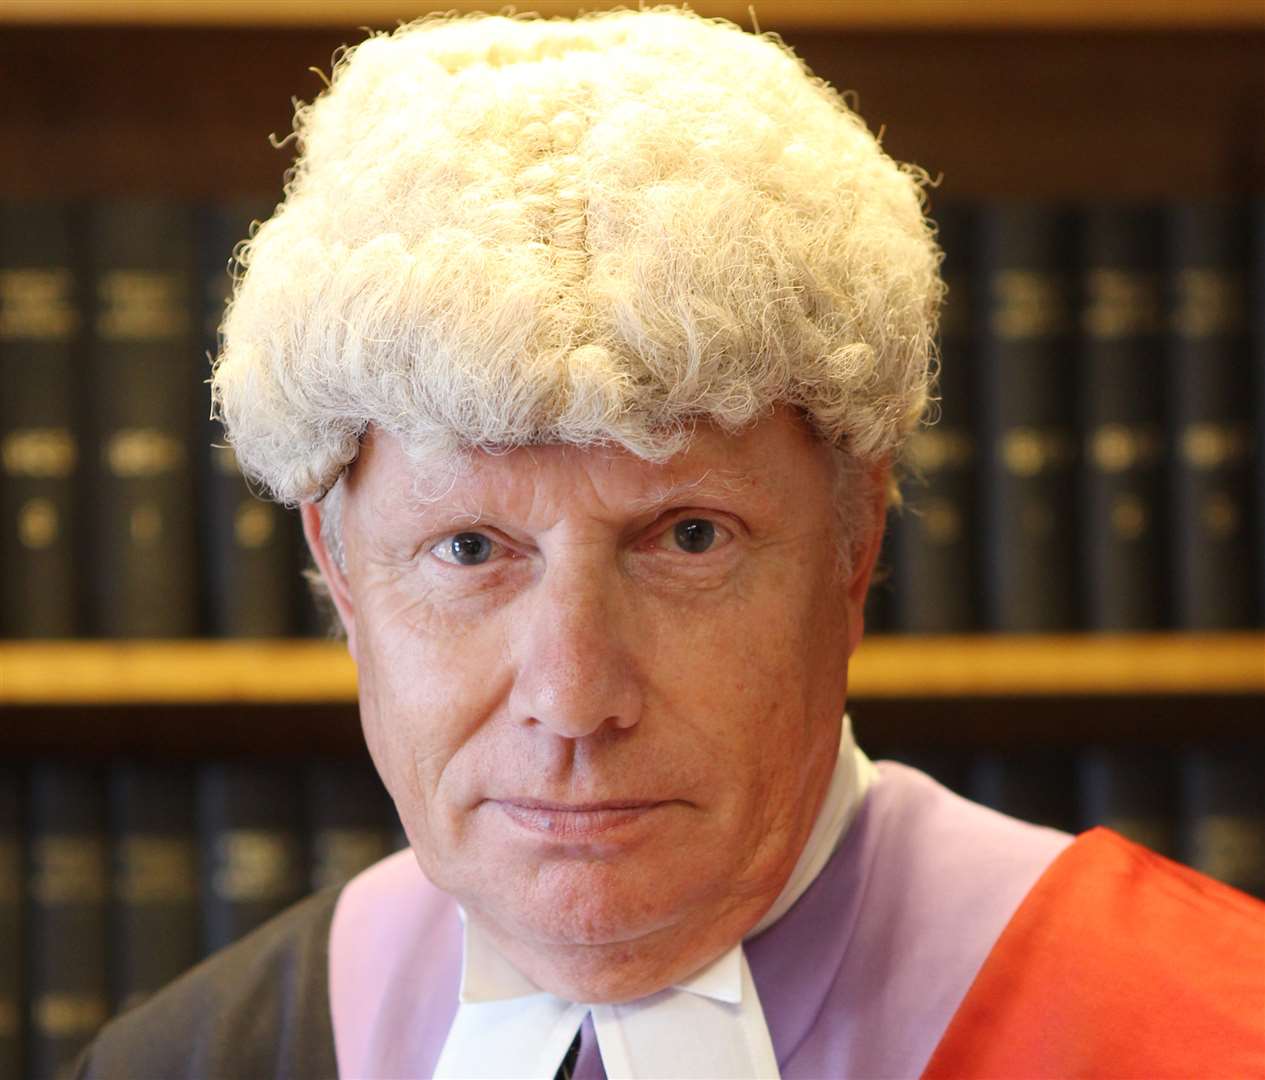 Judge Martin Joy